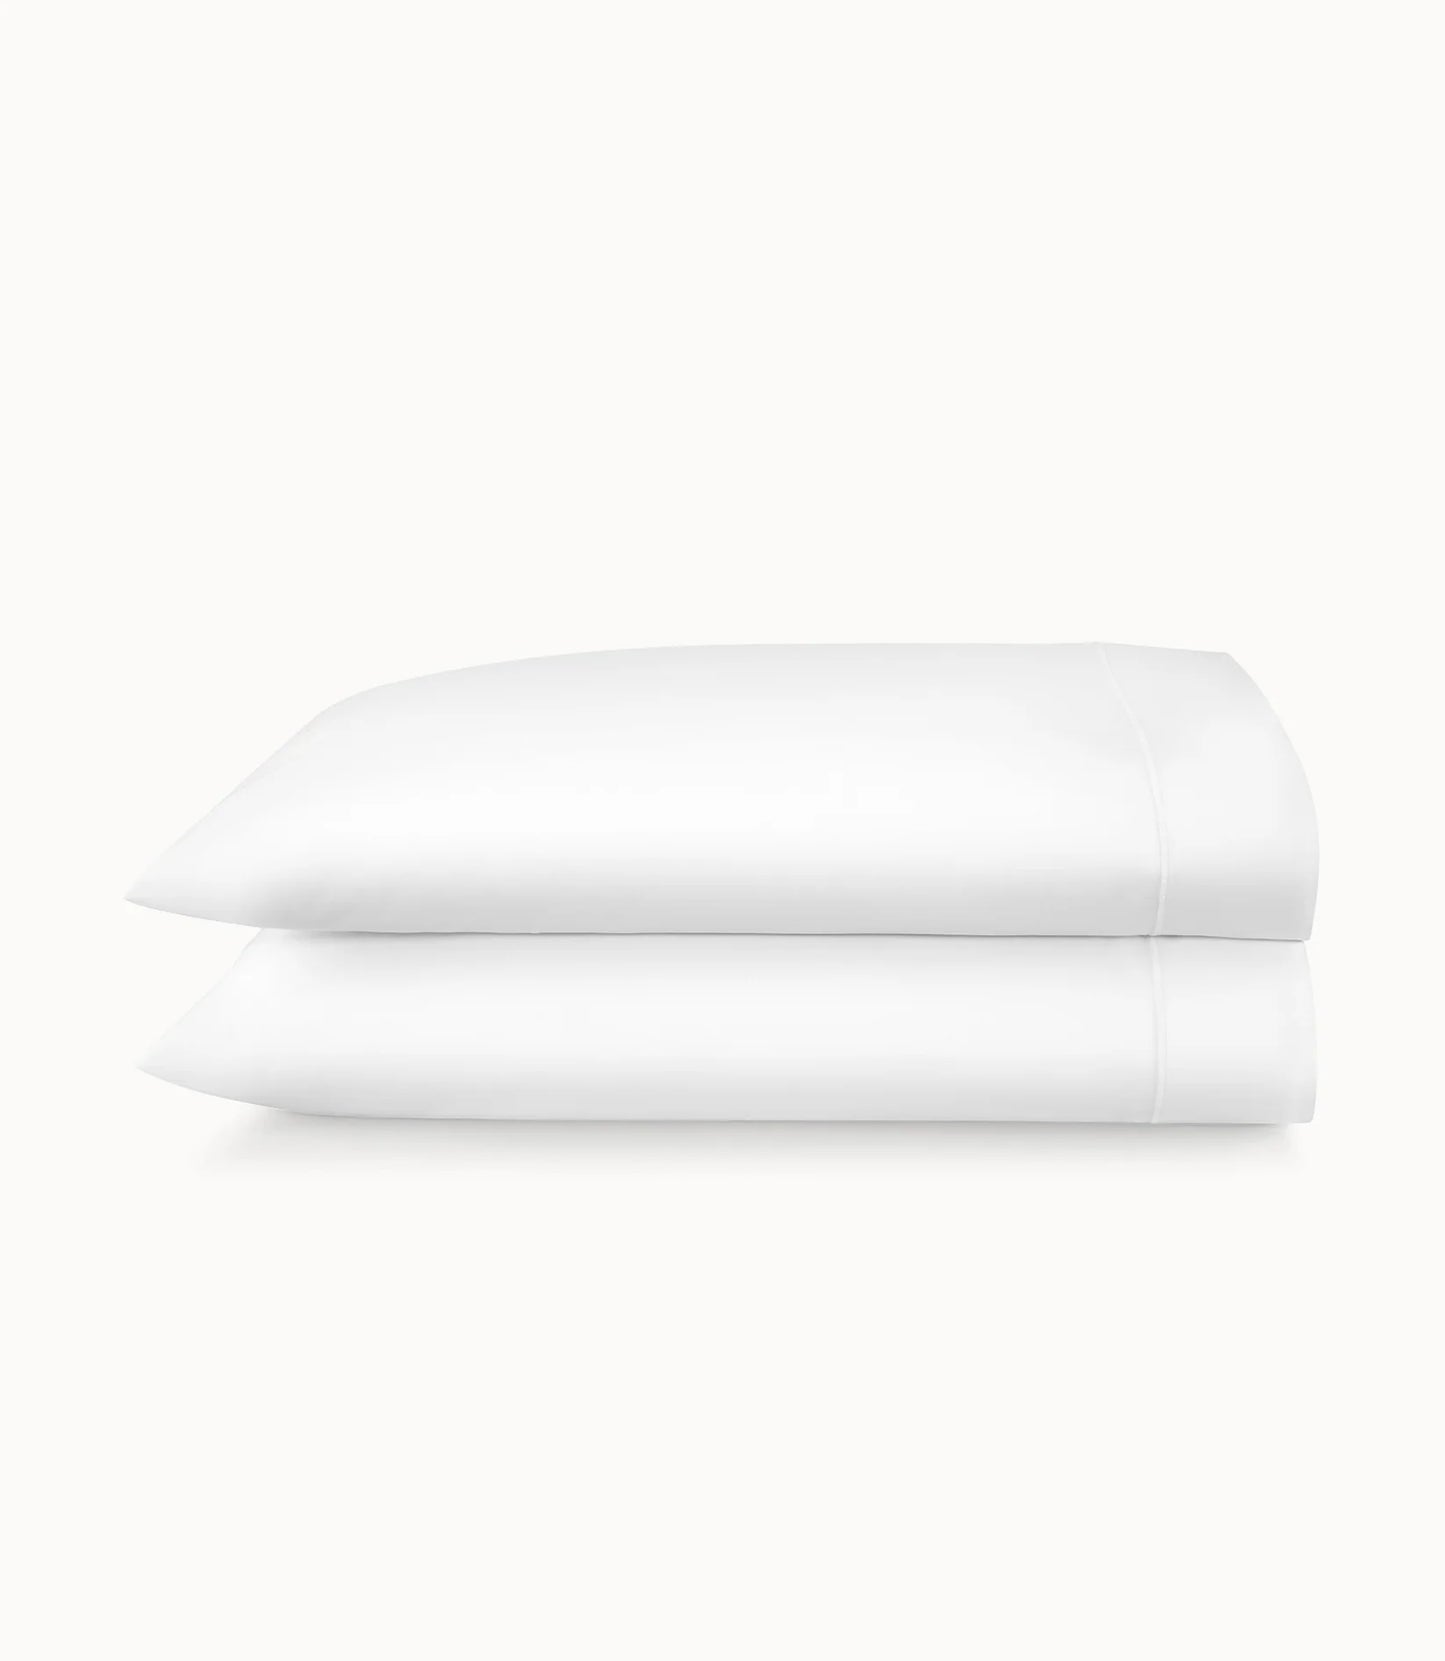 Soprano Sateen Pillowcase Pair by PA